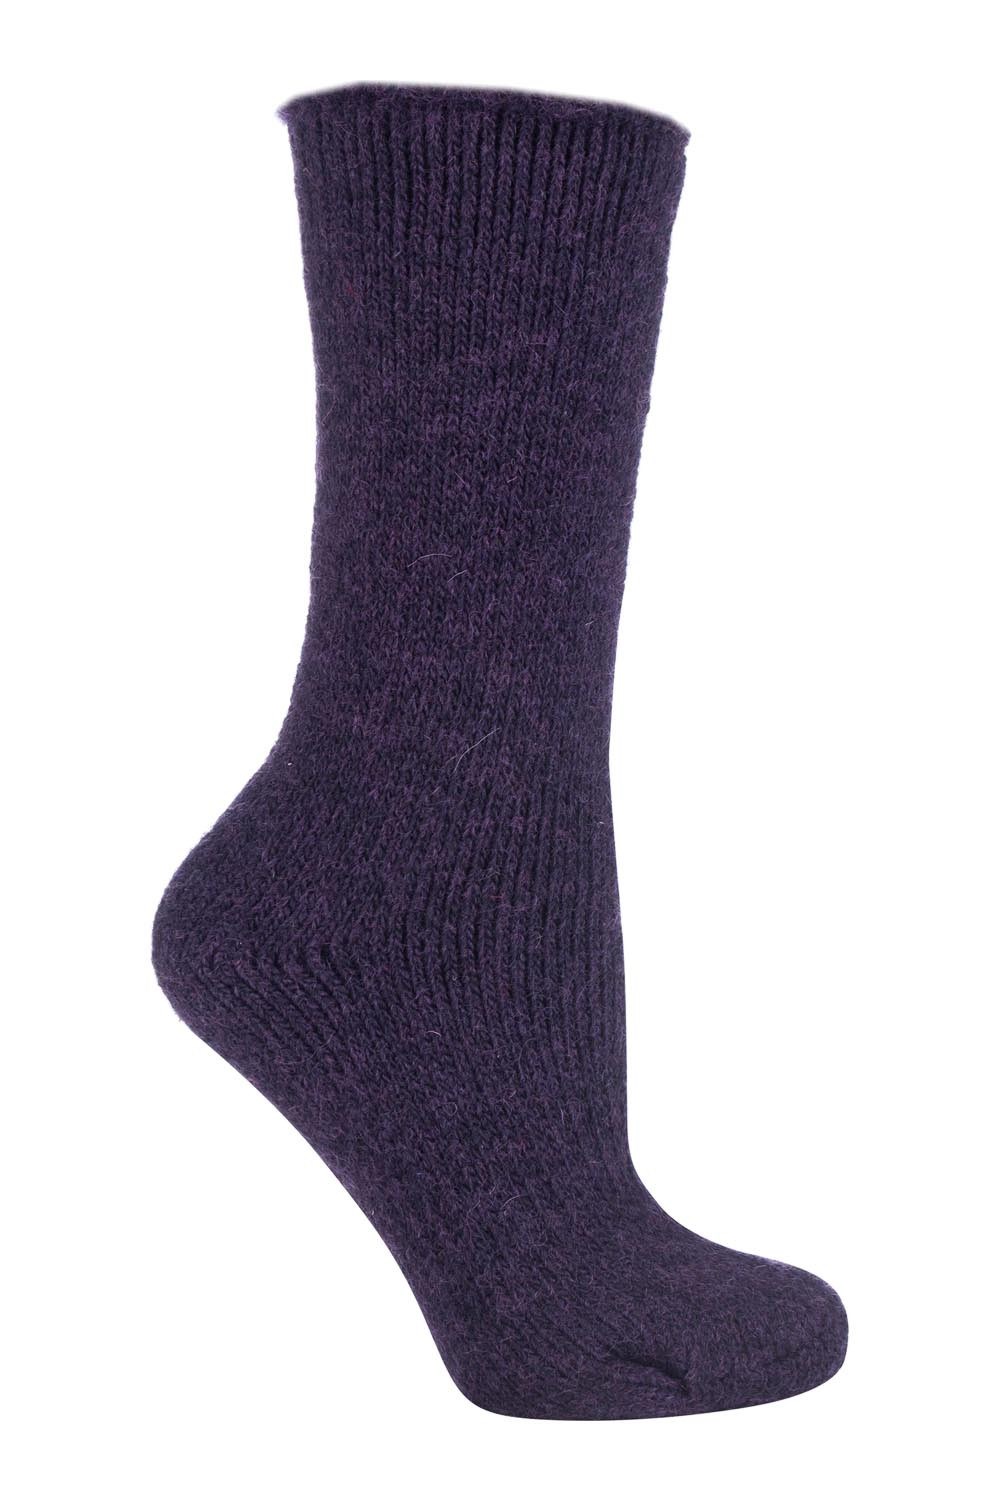 Womens Thick Thermal Wool Socks -